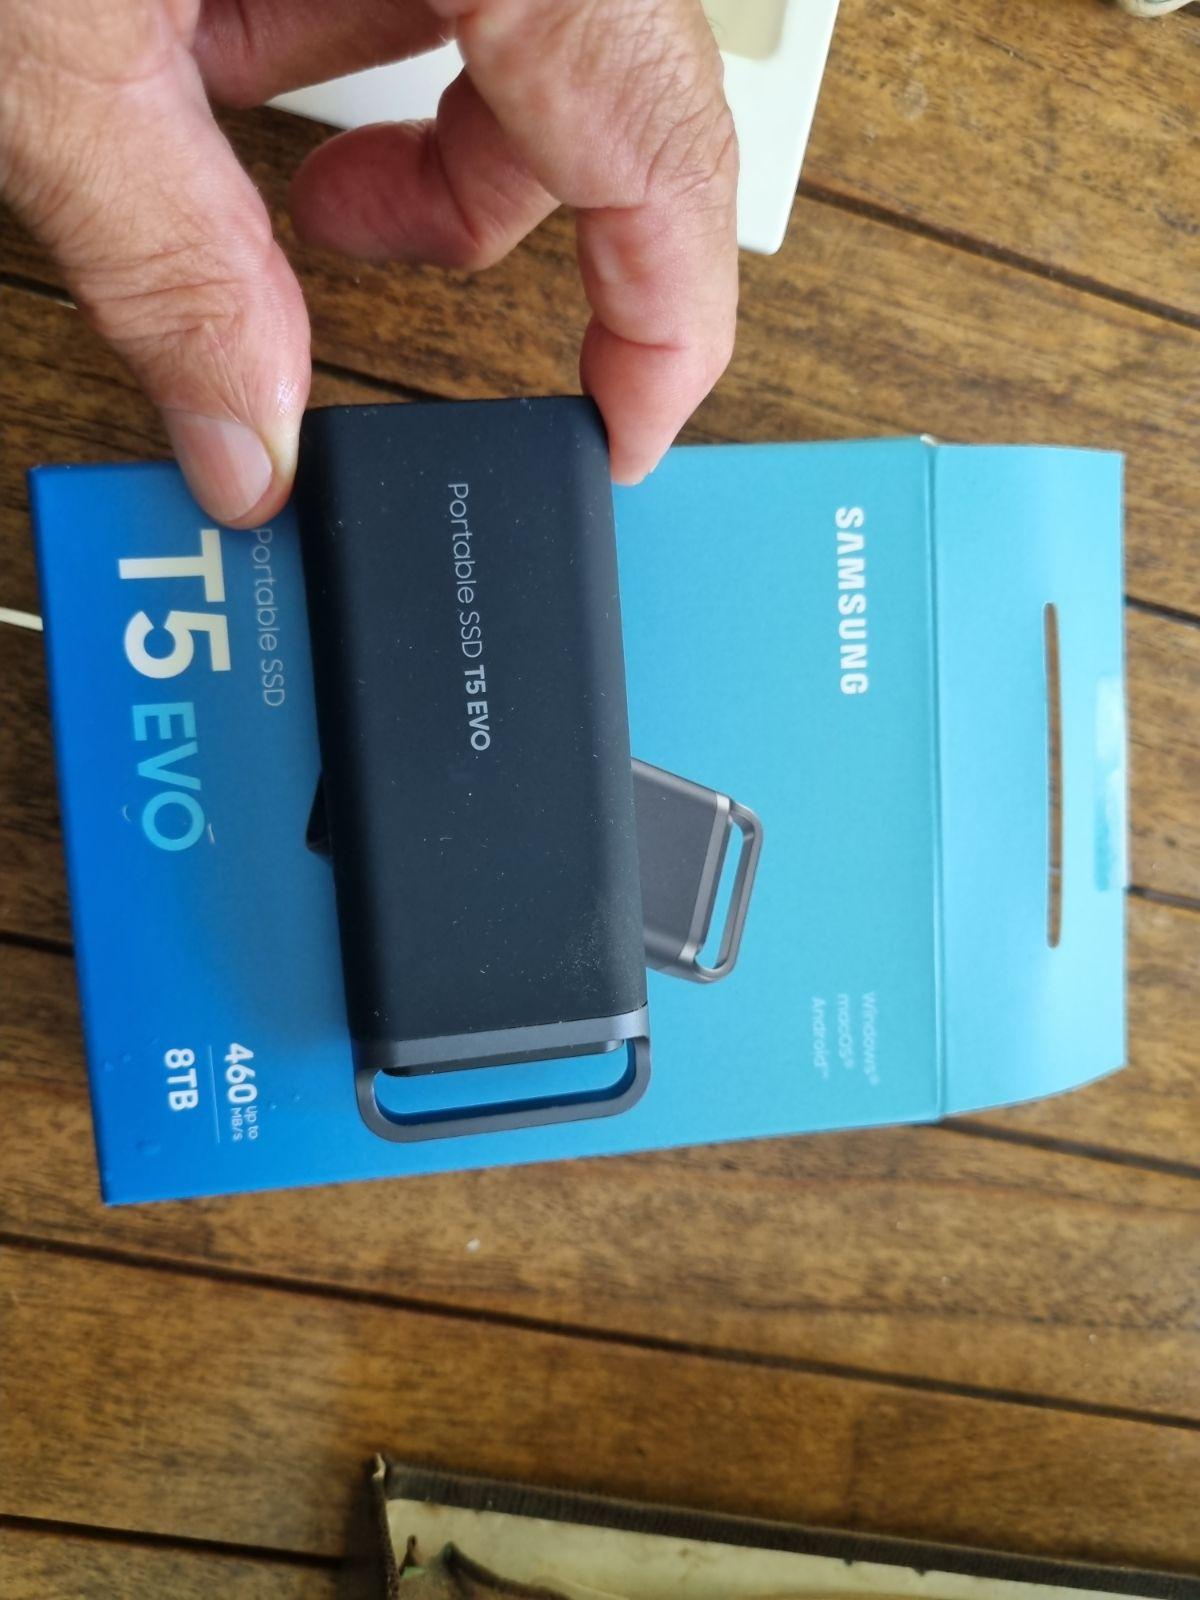 Samsung Portable SSD T5 EVO - 2 To